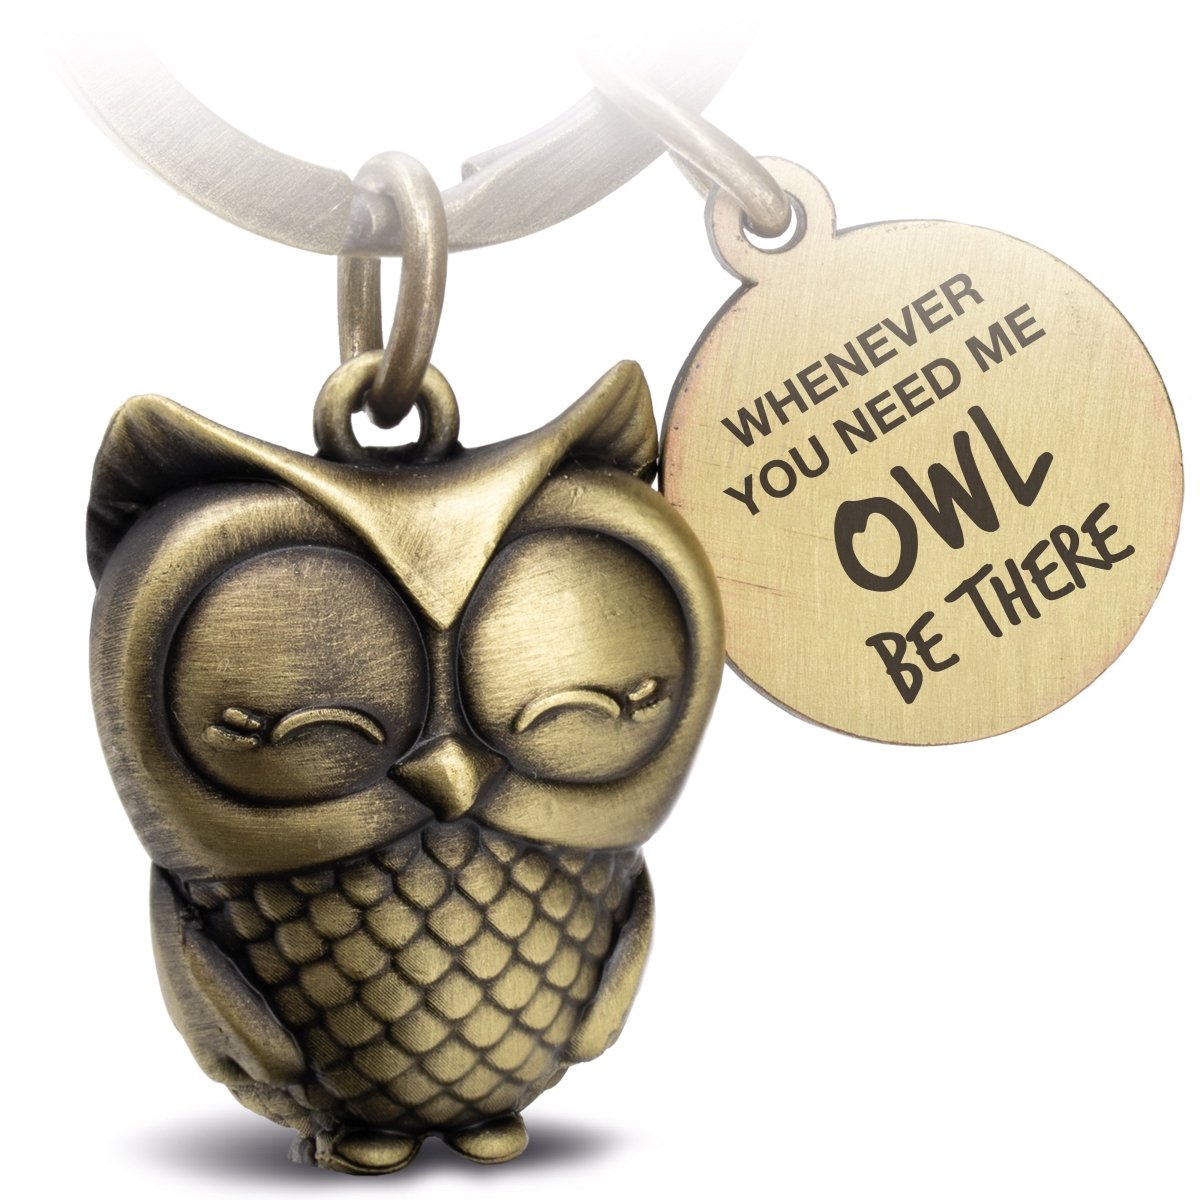 "Whenever you need me, OWL be there" Eule Schlüsselanhänger "Owly" mit Gravur - Süße Eule Glücksbringer - FABACH#farbe_antique bronze#botschaft_Whenever you need me owl be there